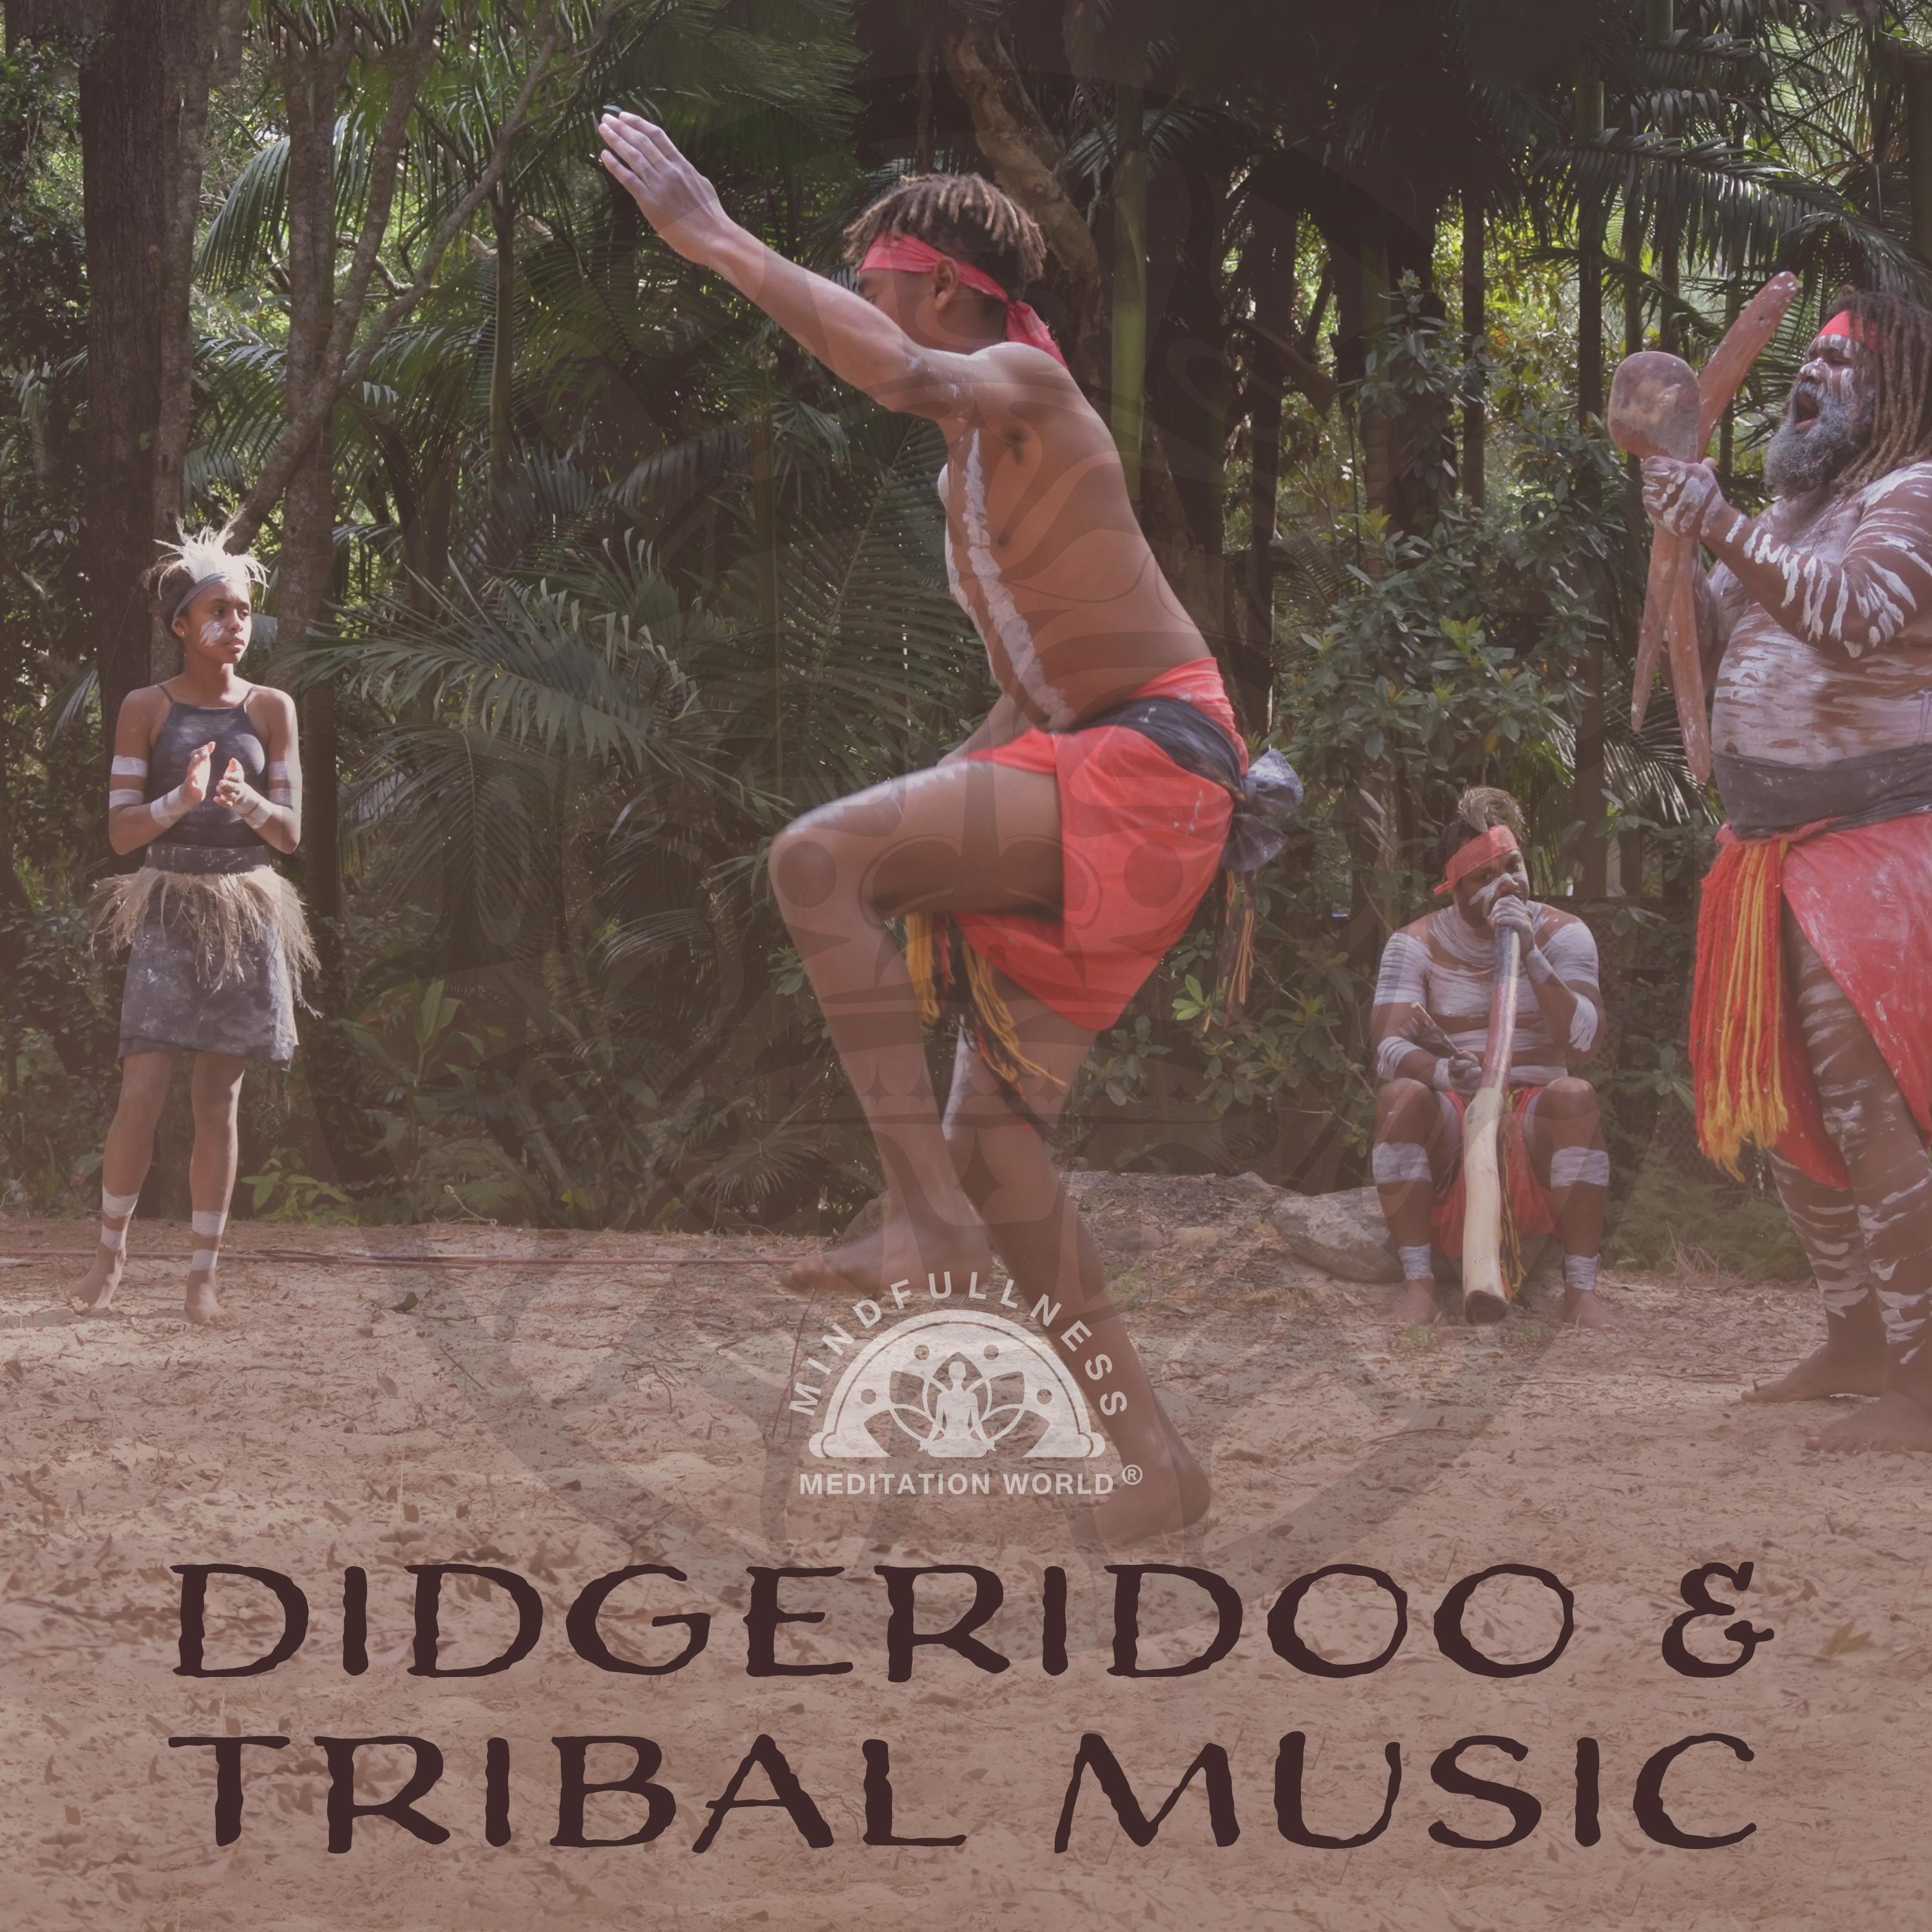 Didgeridoo & Tribal Music